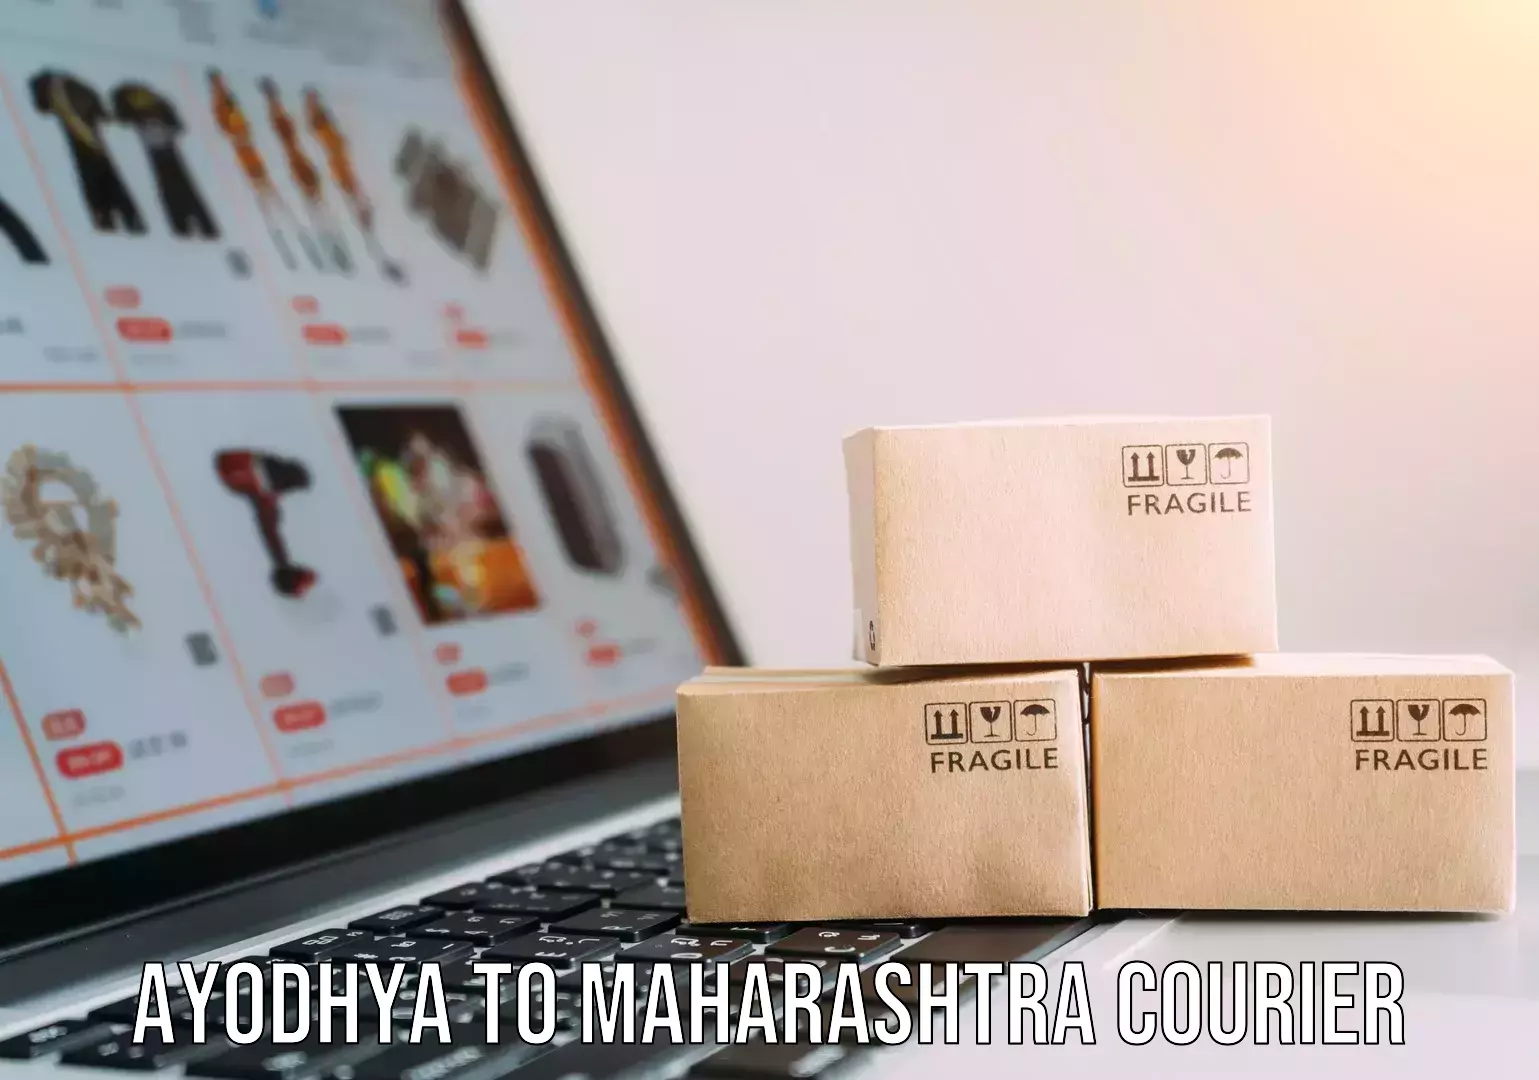 Local delivery service Ayodhya to Maharashtra